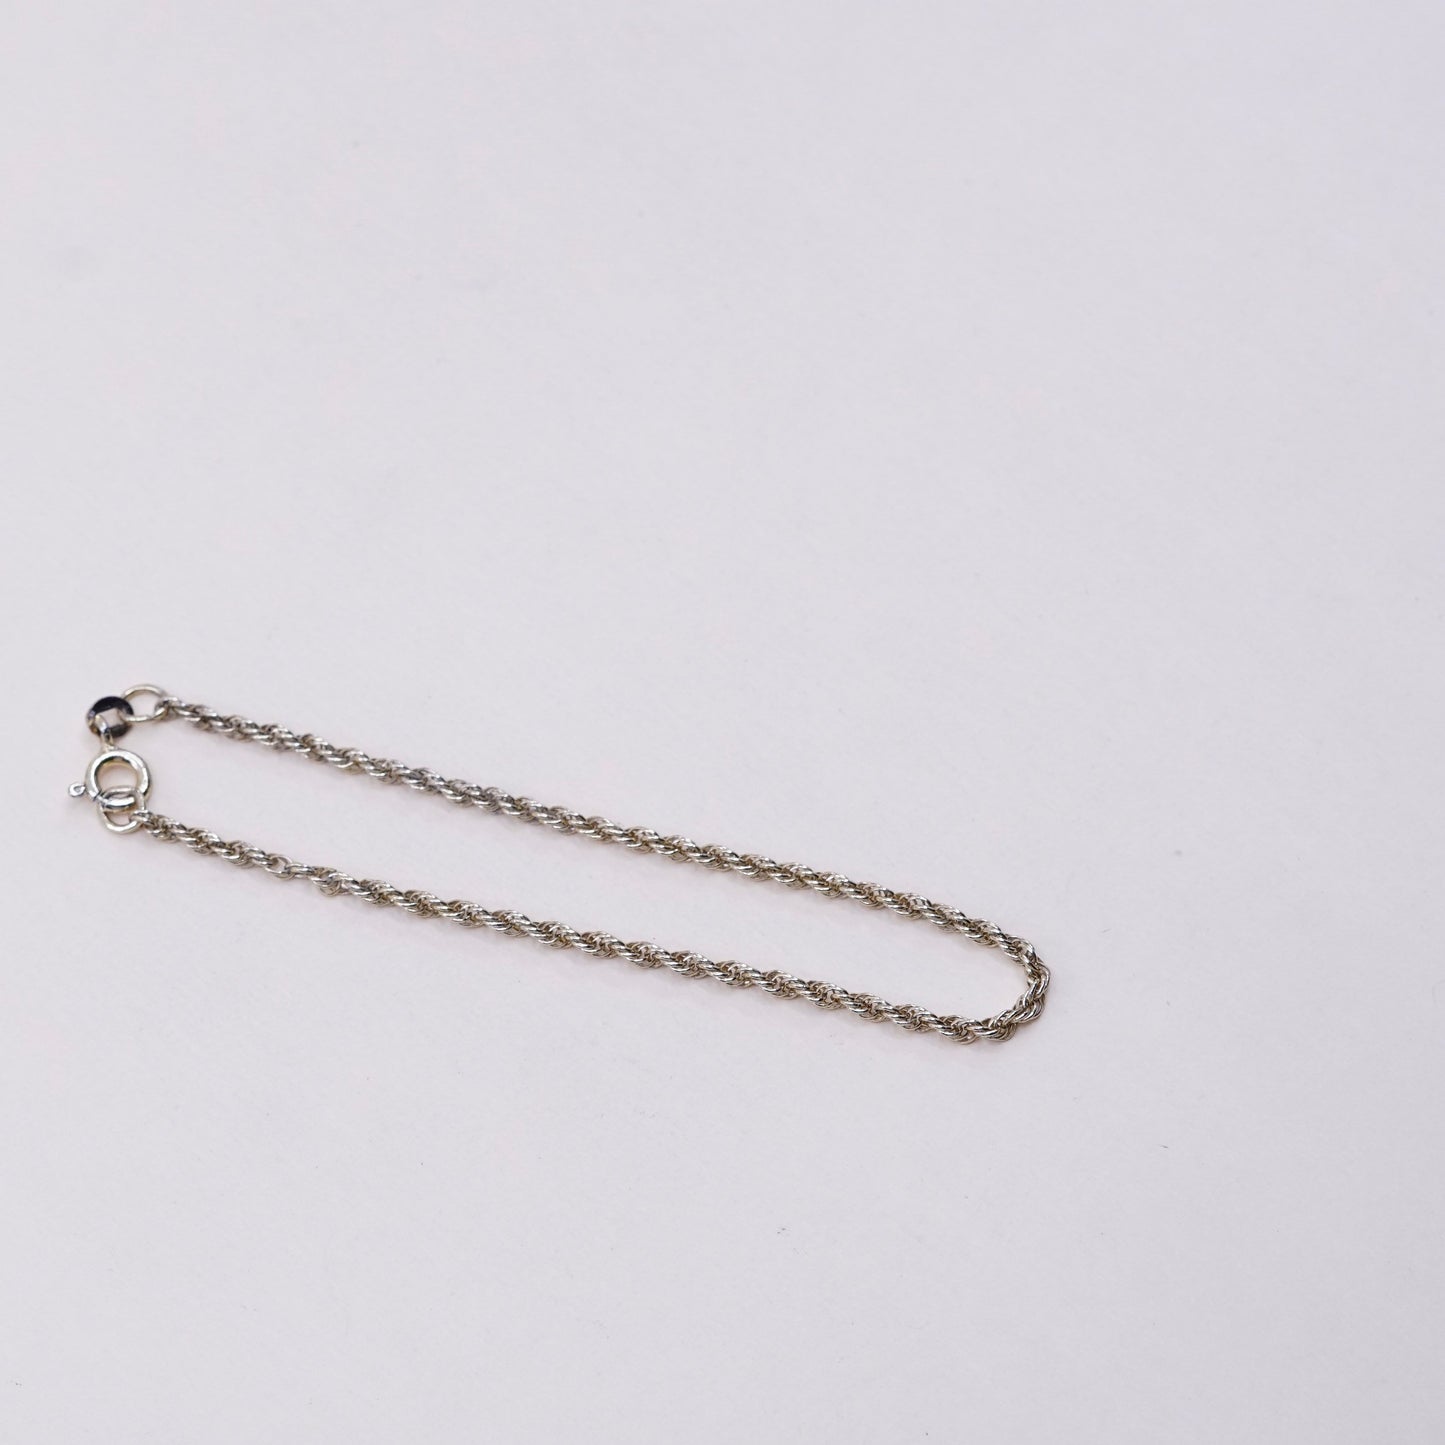 7.25”, Vintage vermeil gold over sterling 925 silver Canada rope chain bracelet